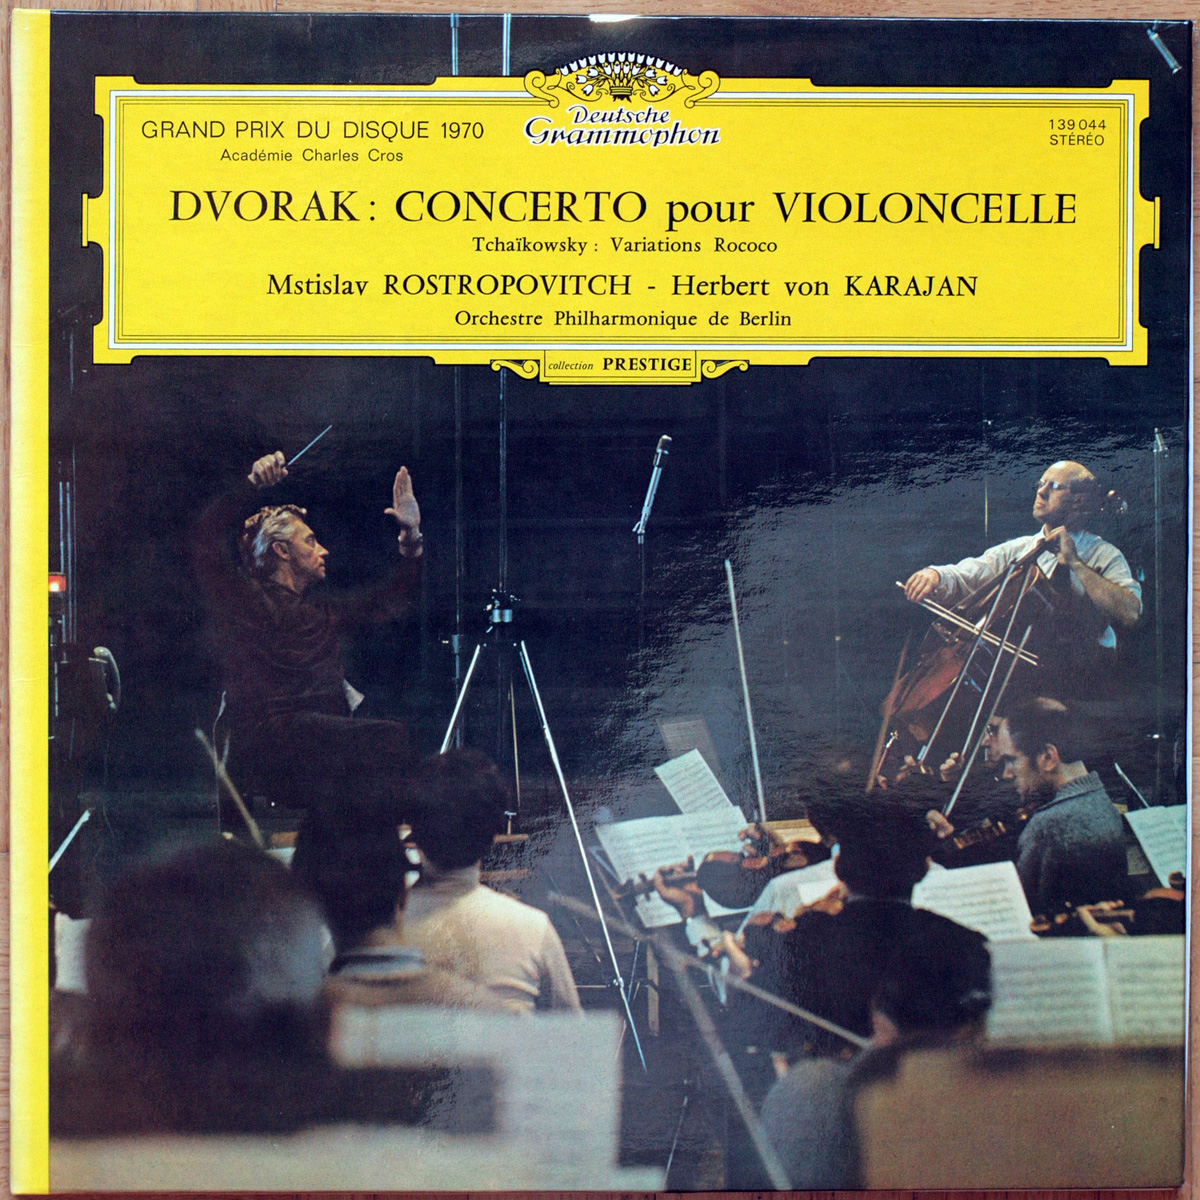 Dvořák • Concerto pour violoncelle • Cello concerto • Tchaikowsky • Variations Rococo • DGG 139 044 • Mstislav Rostropovitch • Berliner Philharmoniker • Herbert von Karajan